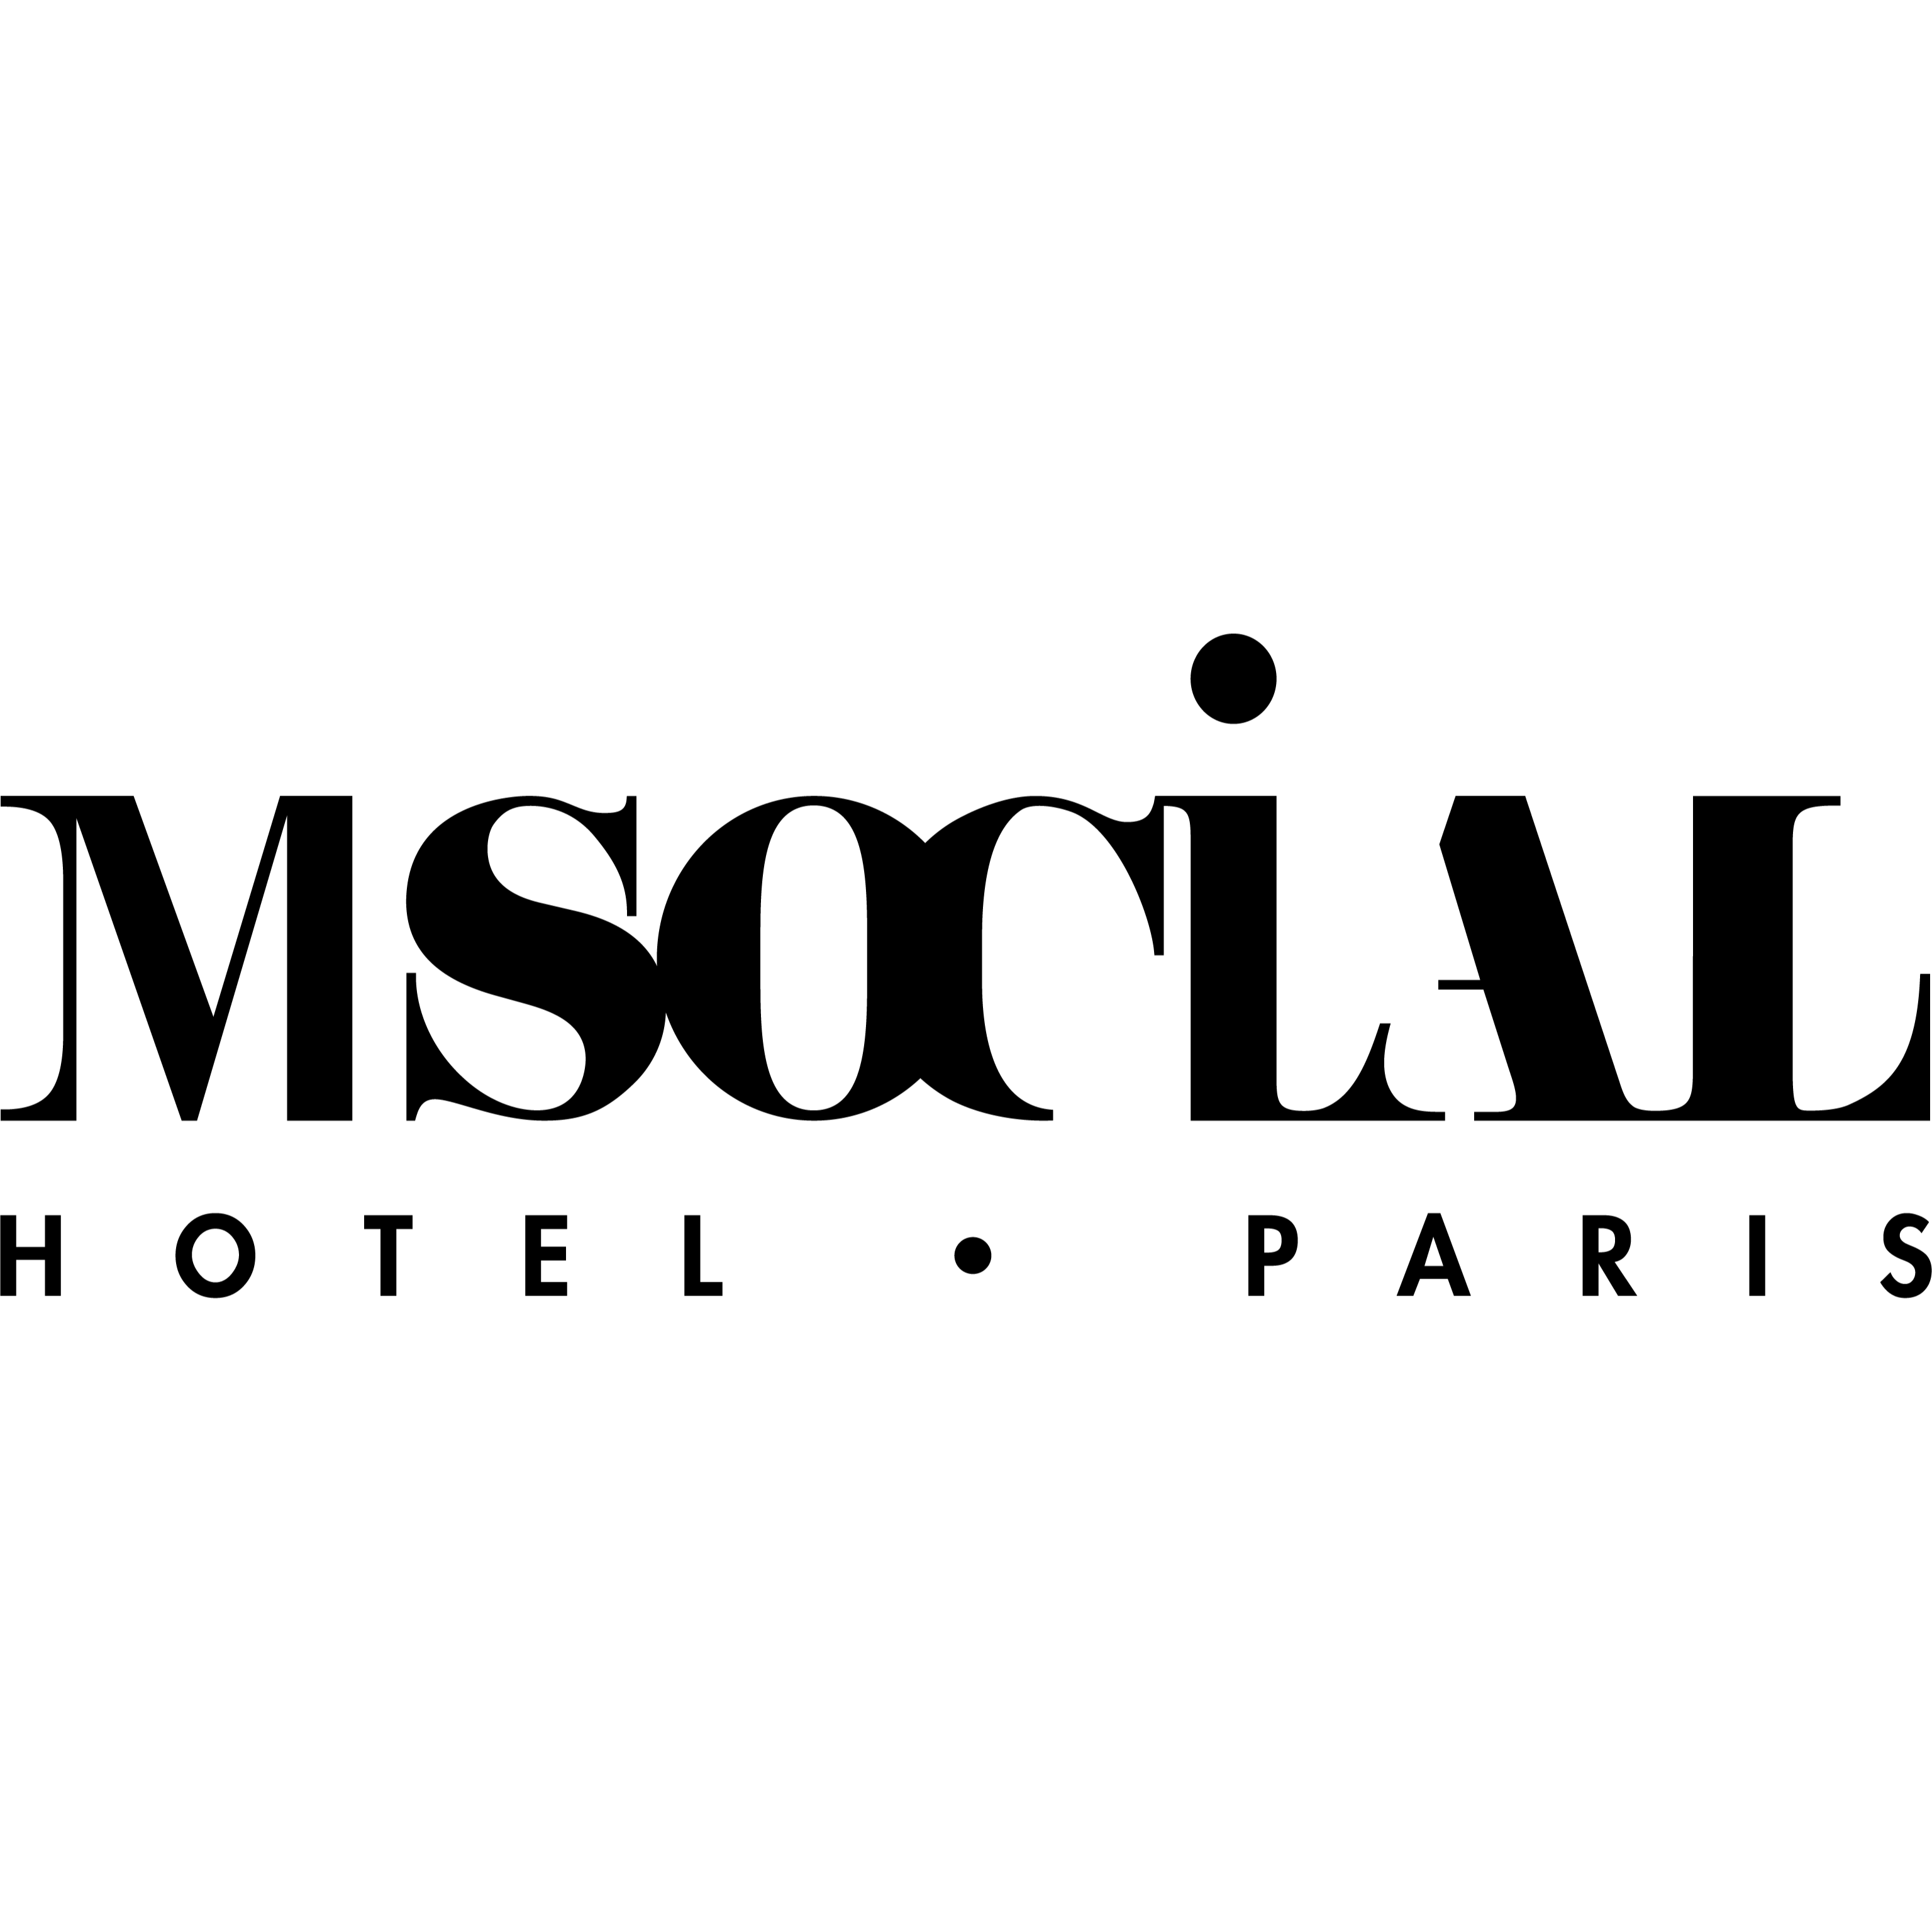 M Social Hotel Opera Paris Logo